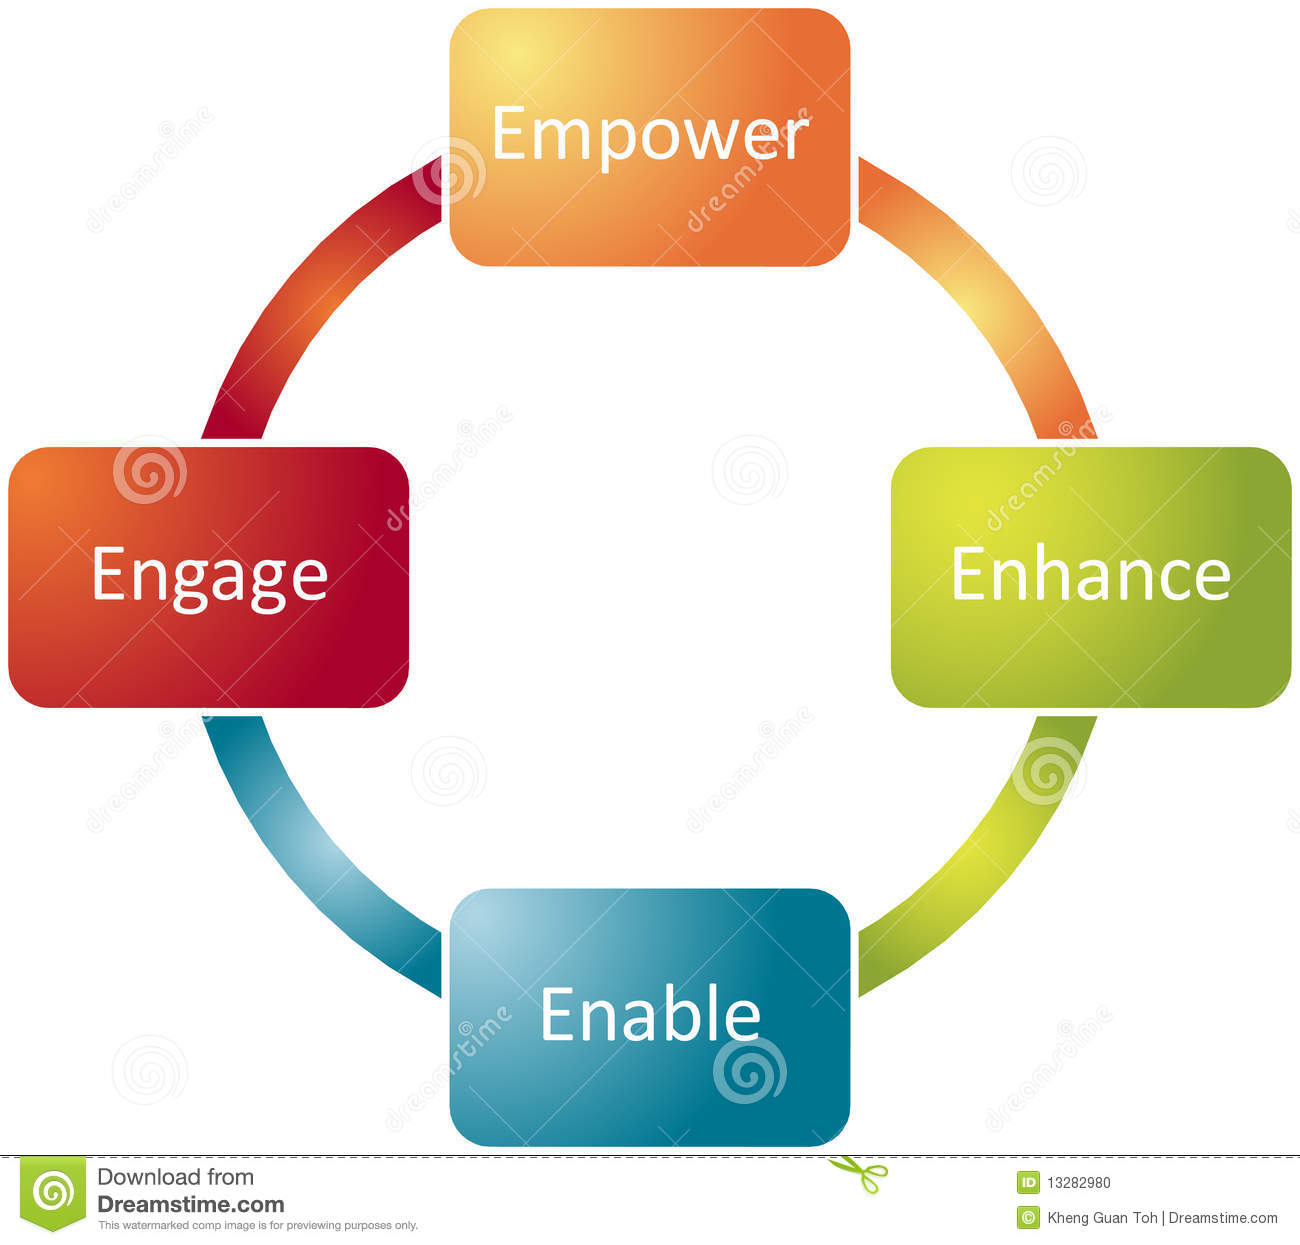 Employee Empowerment Business Diagram Stock Photo   Image  13282980